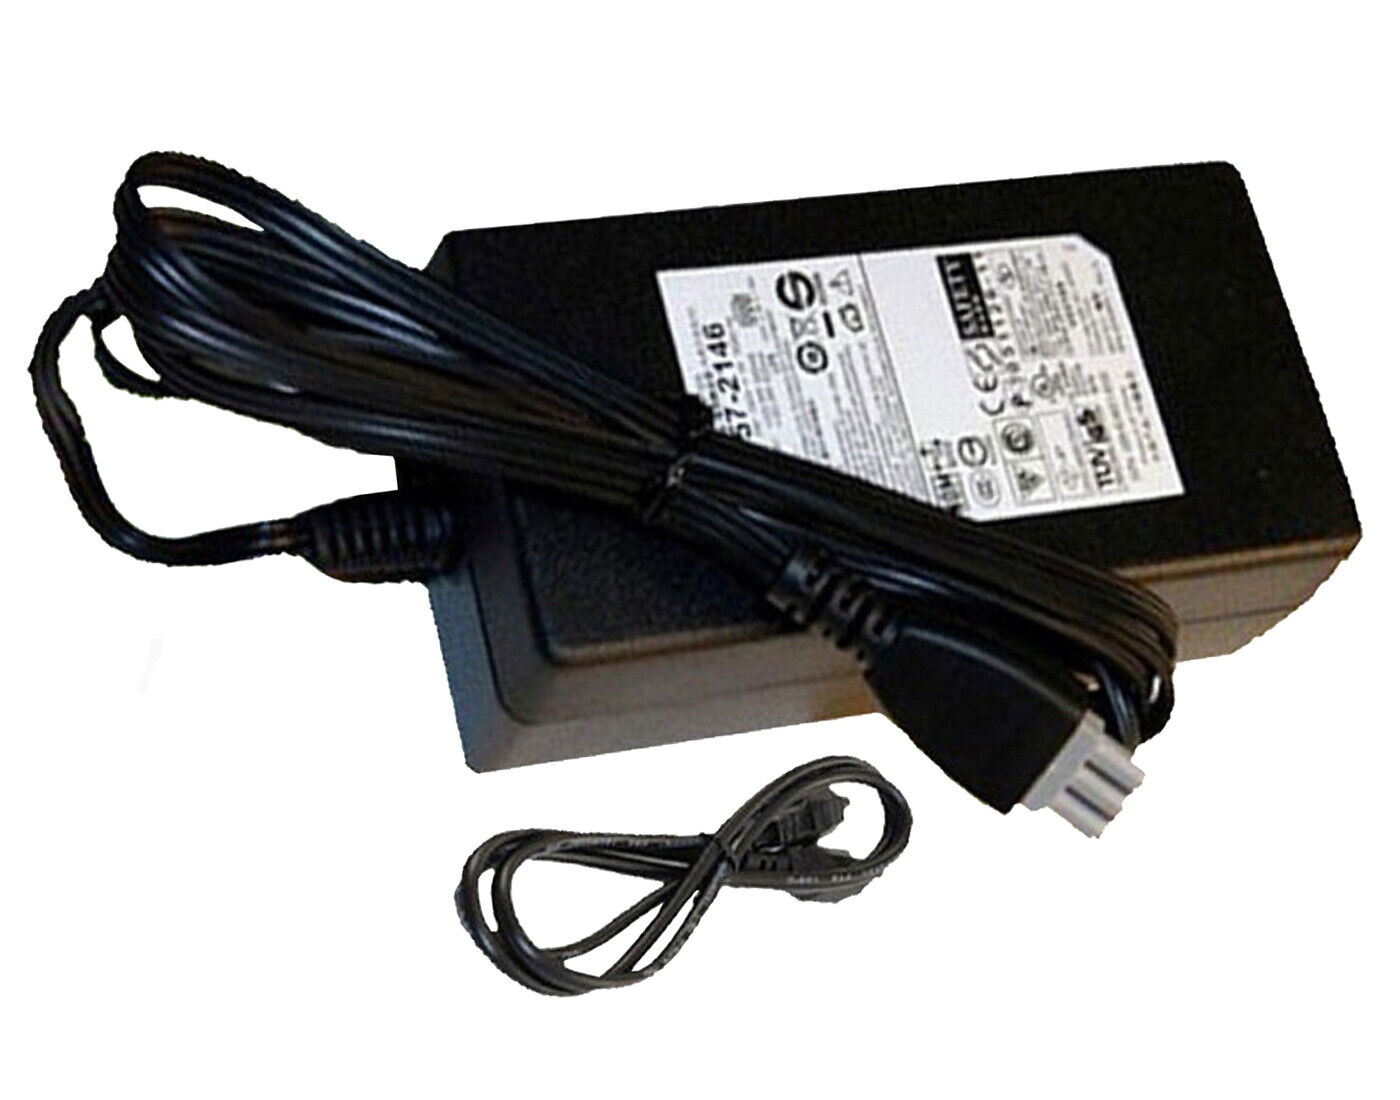 32V 16V AC Adapter For HP Photosmart OfficeJet Printer DC Power Supply Charger